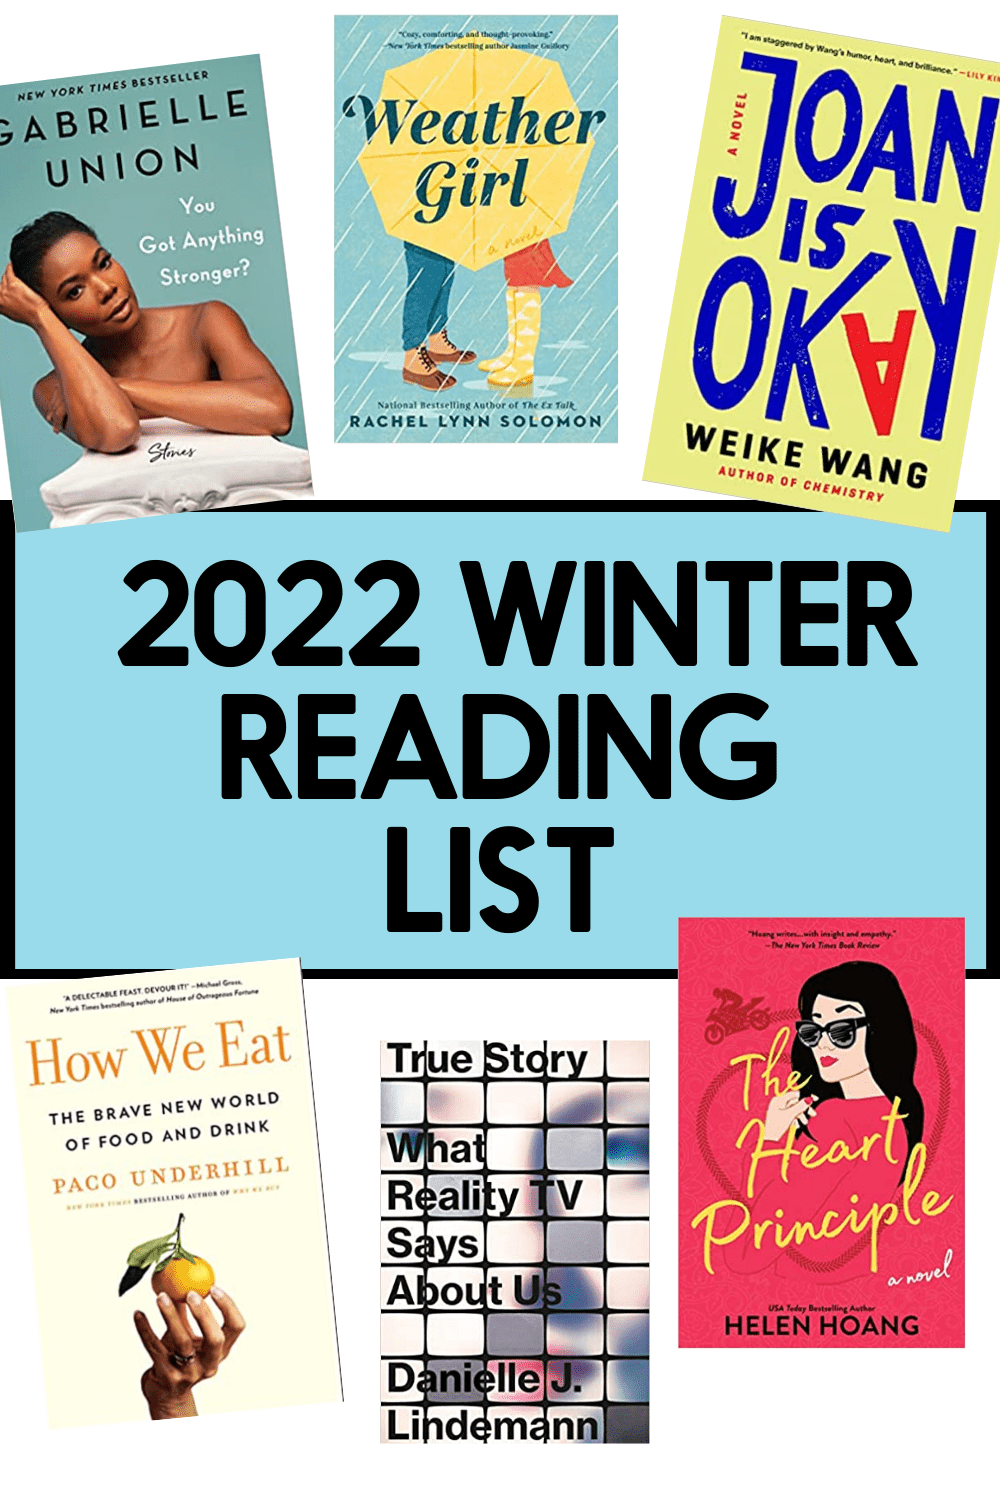 2022 Winter Book Club List